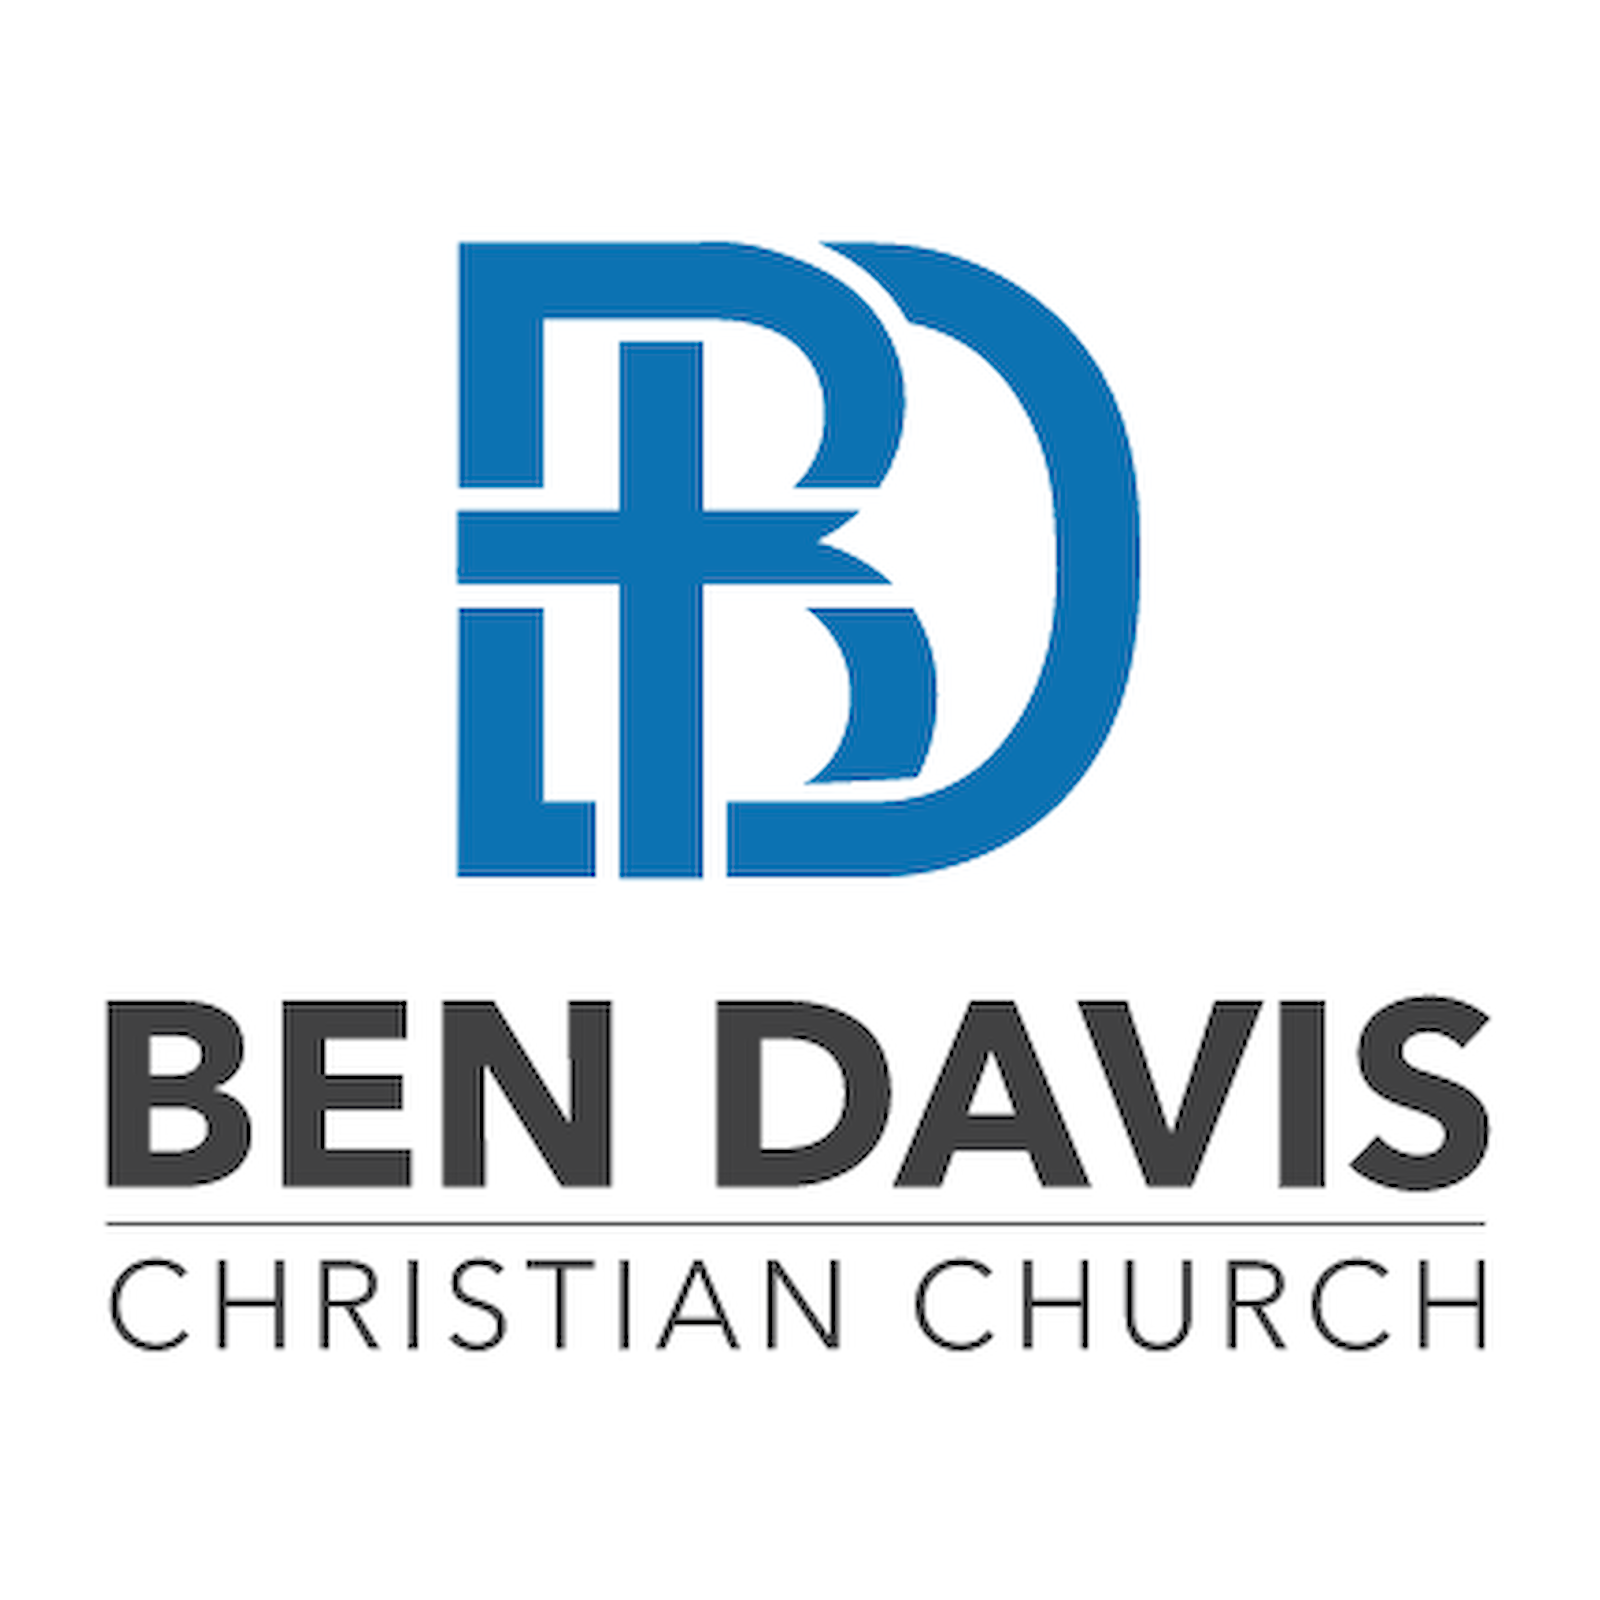 In Partnership with Ben Davis Christian Church